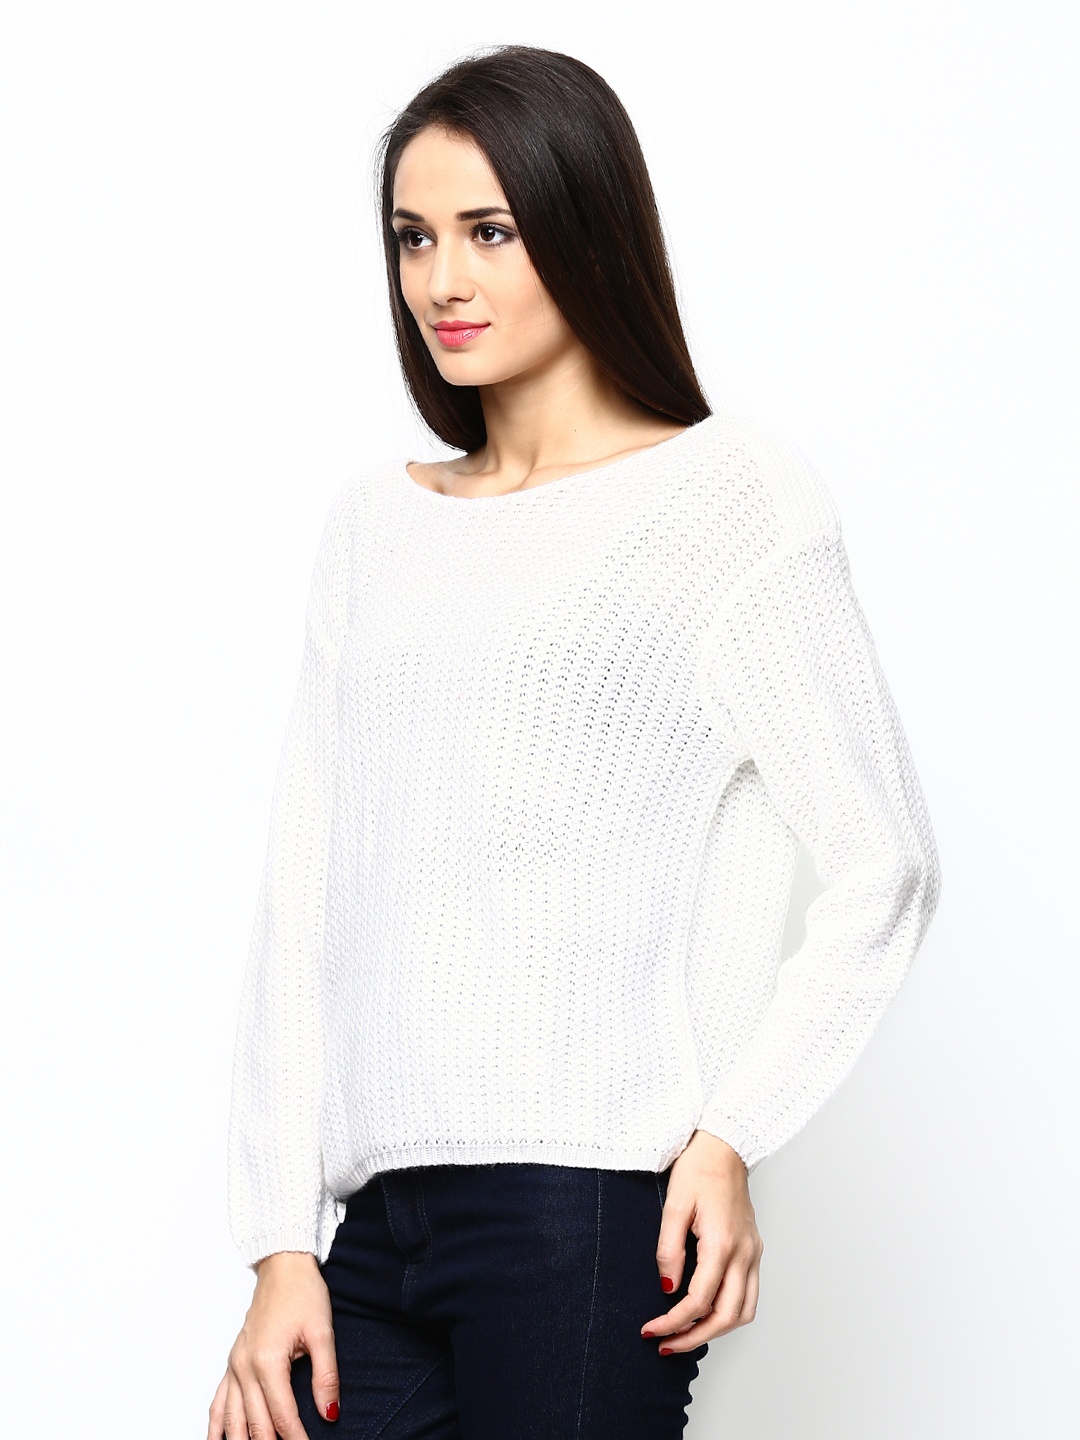 Buy White Sweater | Her Sweater